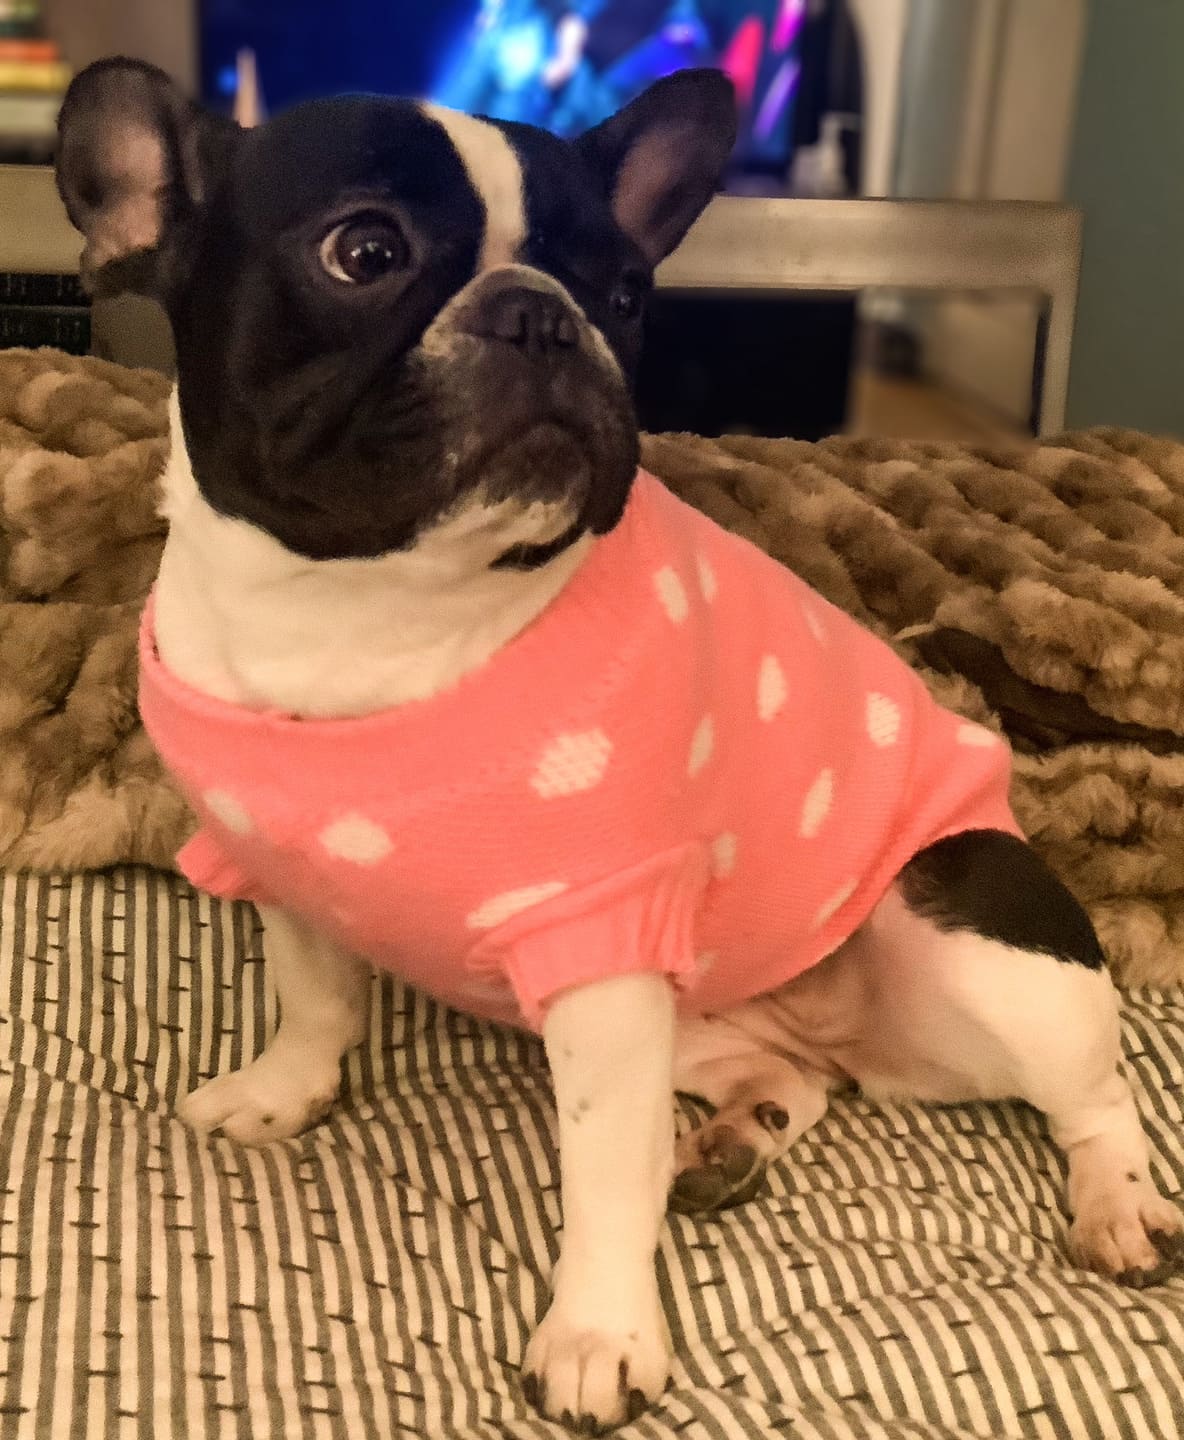 Guinevere Pink Polka Dot Dog Sweater CLEARANCE